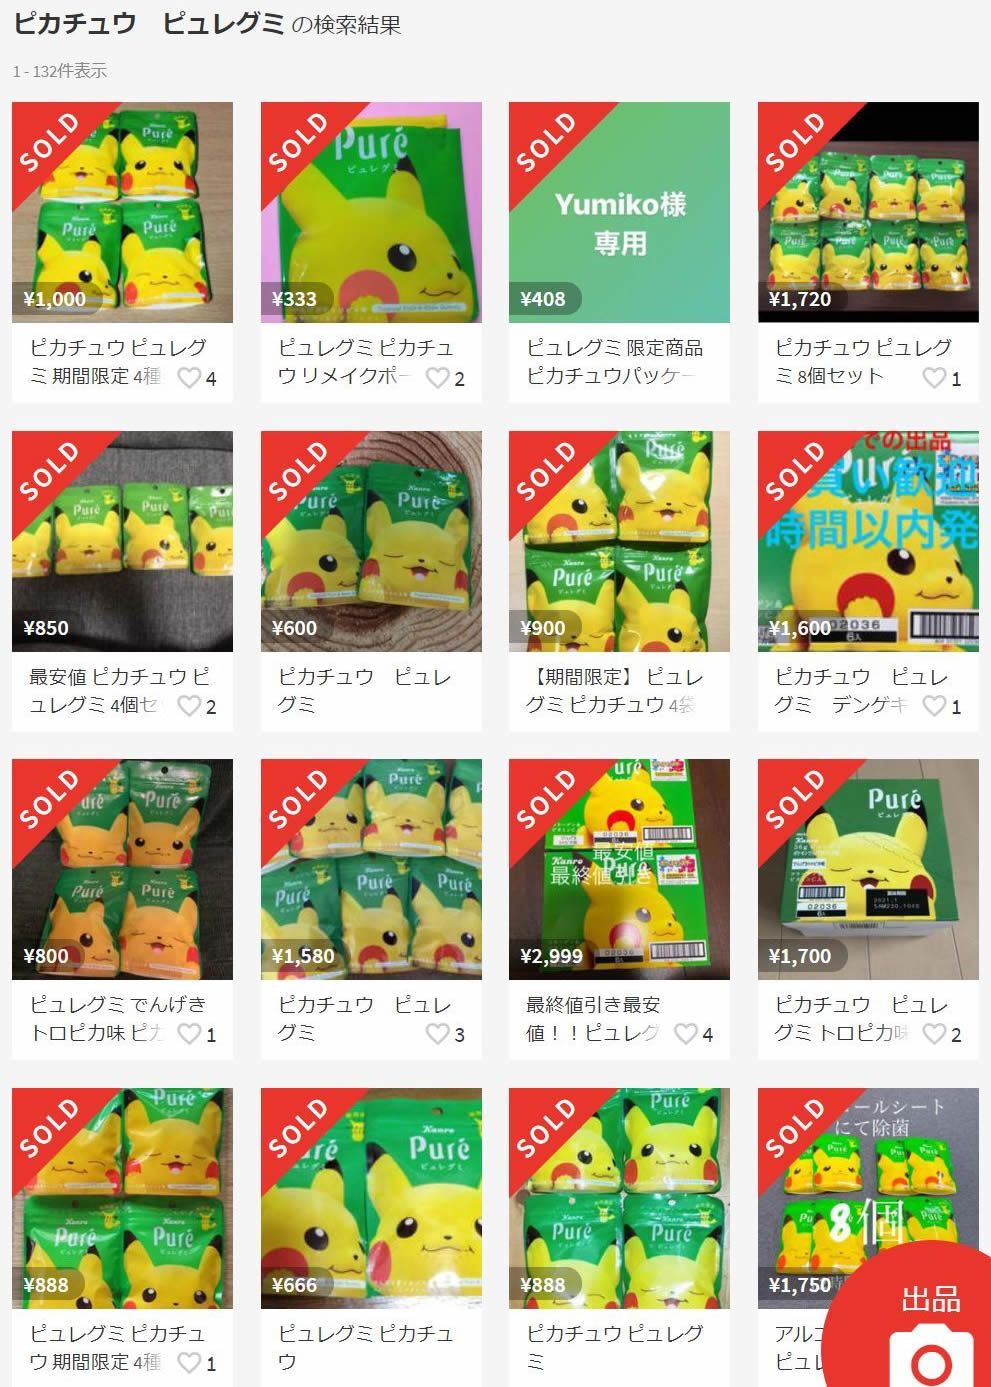 Japanese Candy Company Kanro To ReRelease PokémonThemed PikachuShaped Gummies